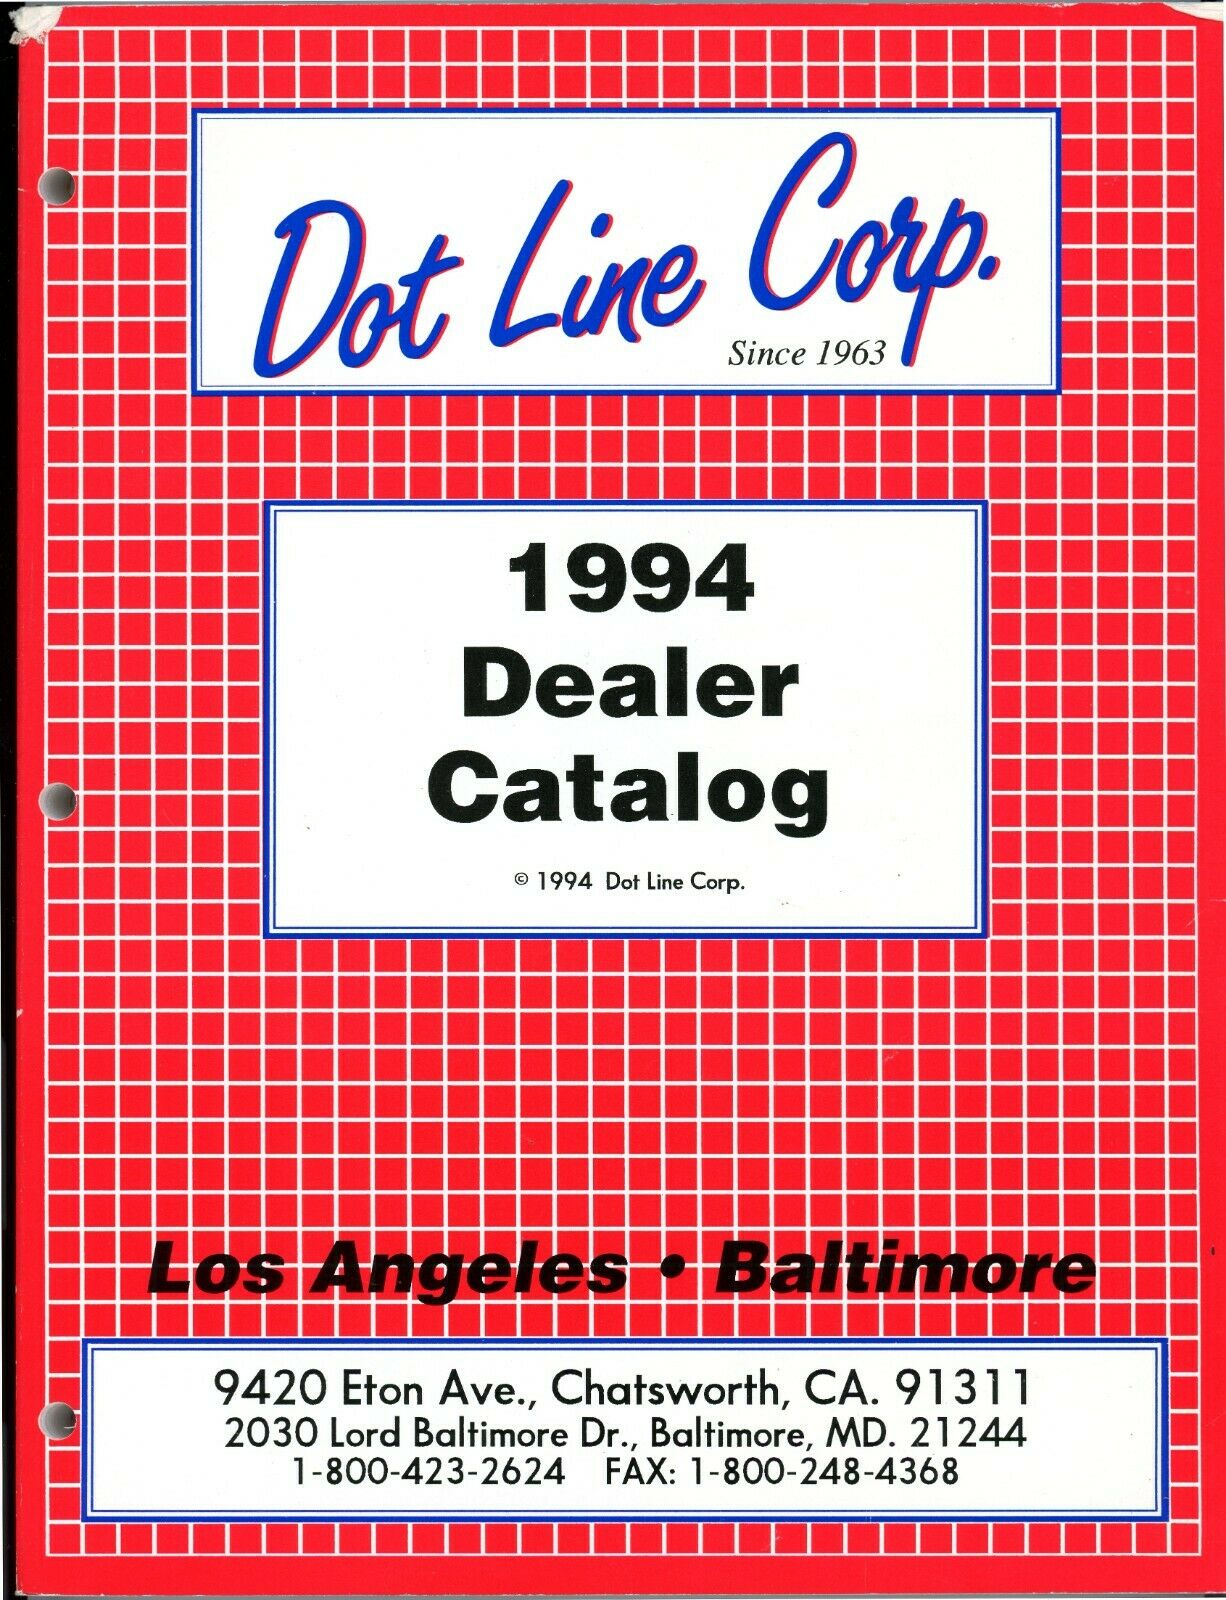 Dot Line Corp. 1994 Dealer Catalog, Photographic Porducts